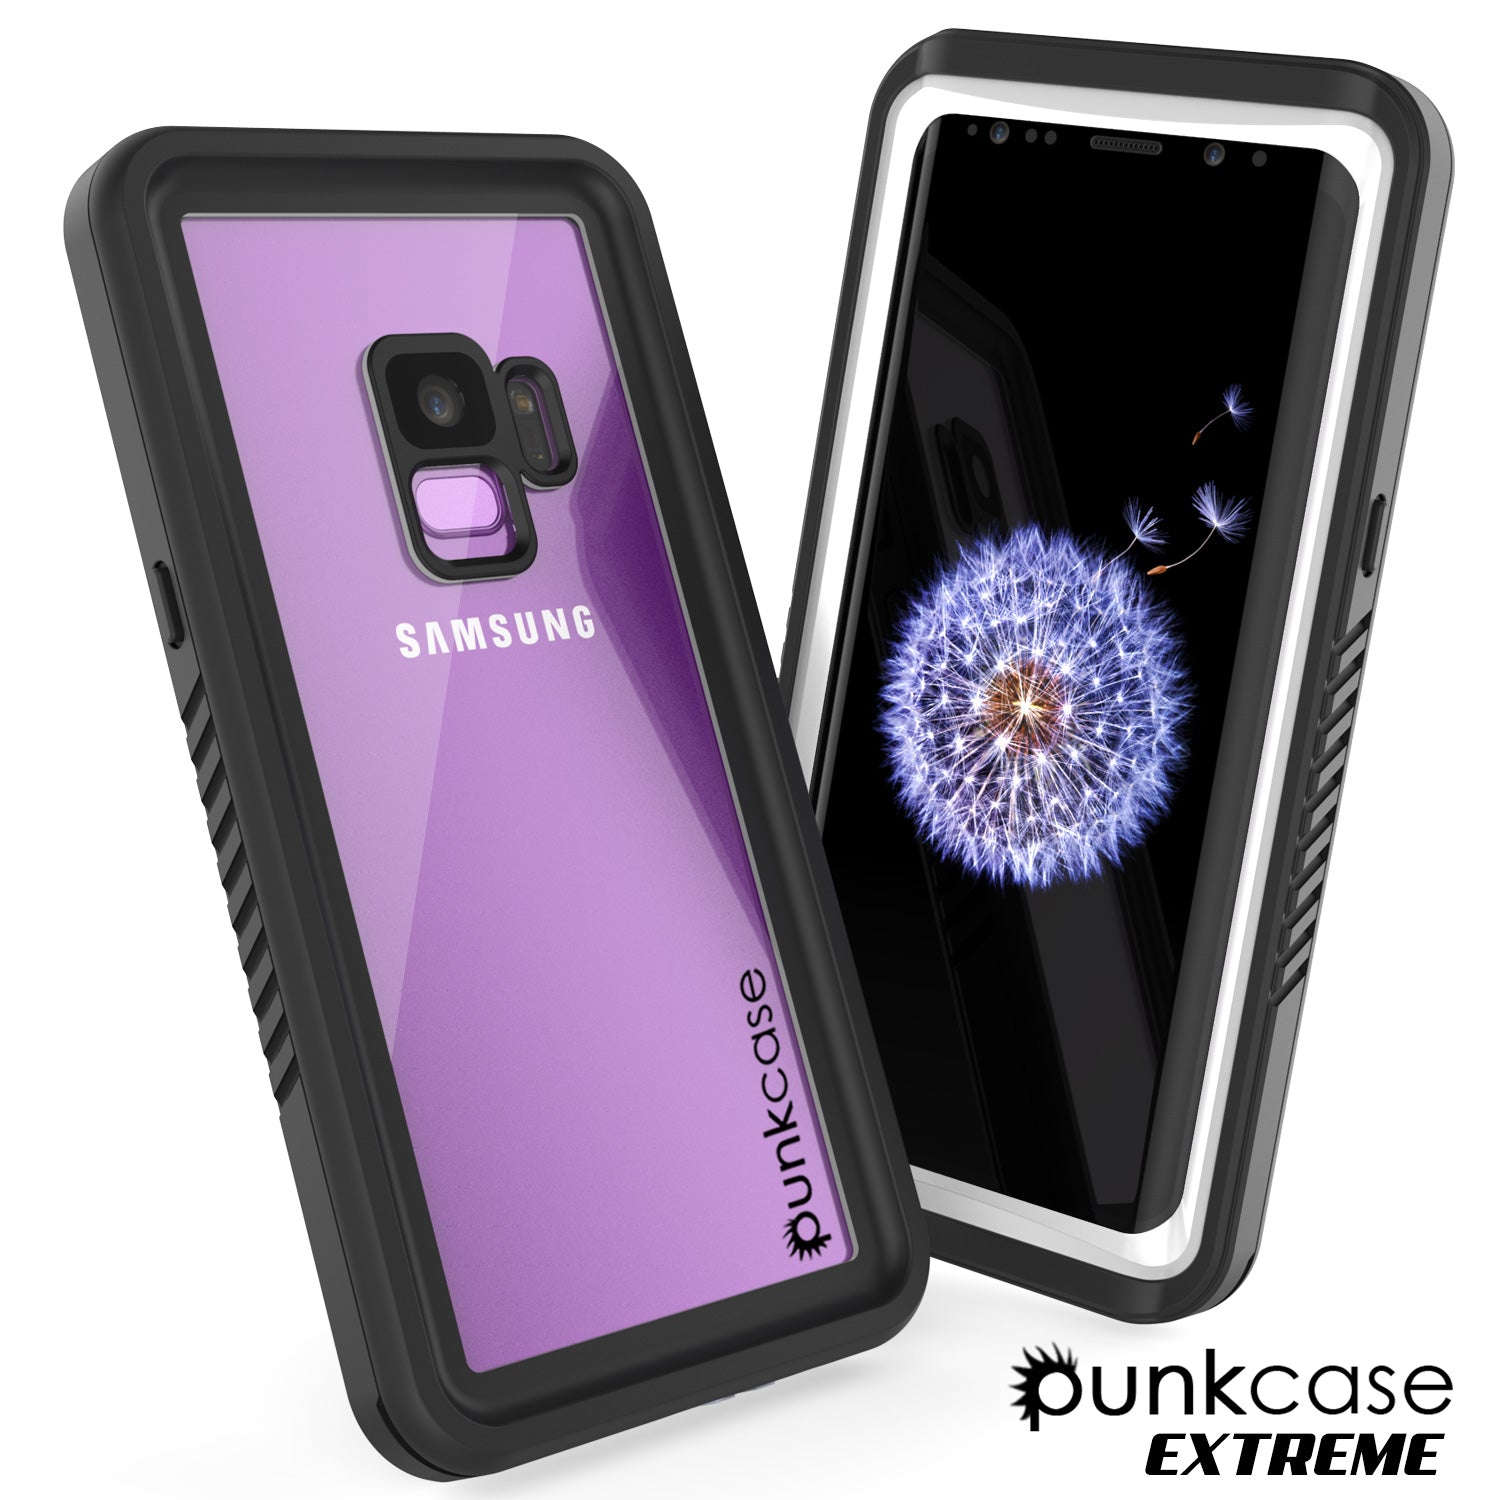 Punkcase Galaxy S9 Extreme Series Waterproof Body | White